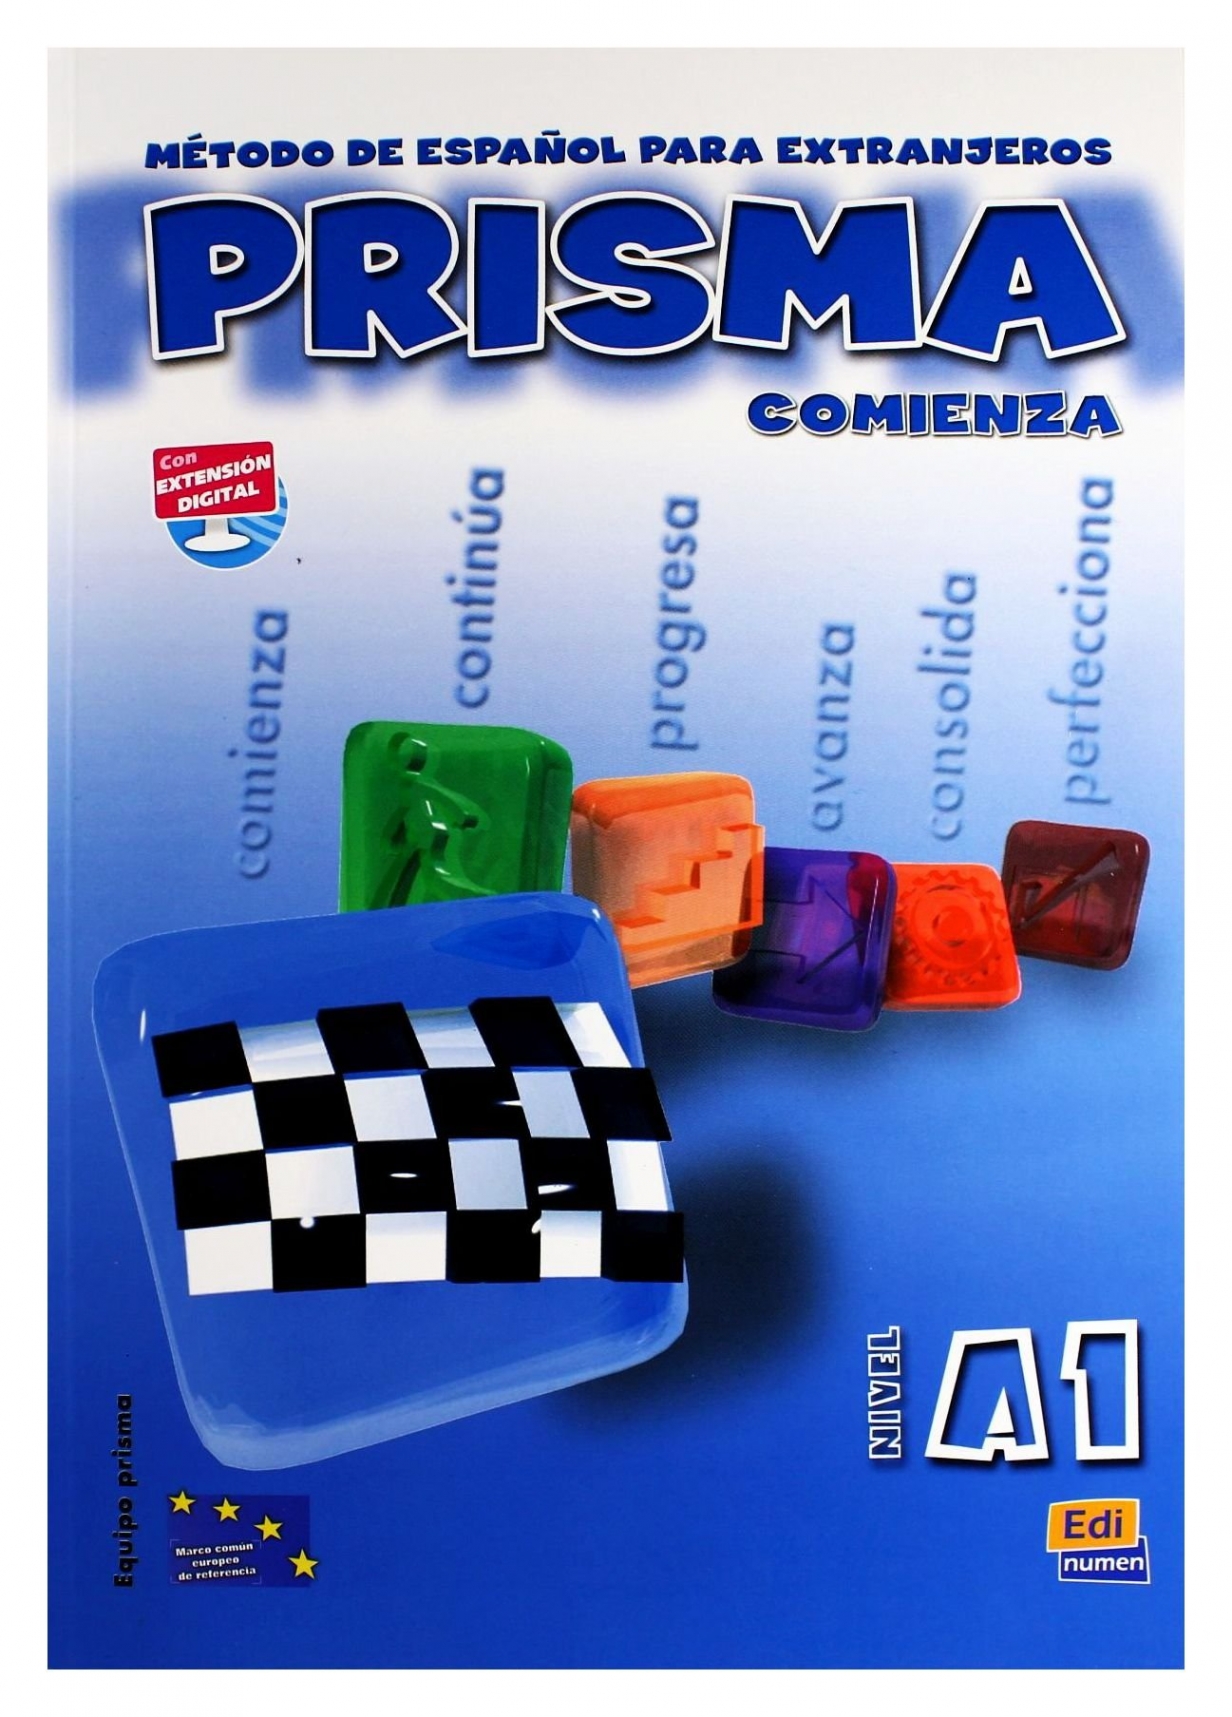 Координатор проекта: Maria Jose Gelabert Prisma A1 - Comienza - Libro del alumno 